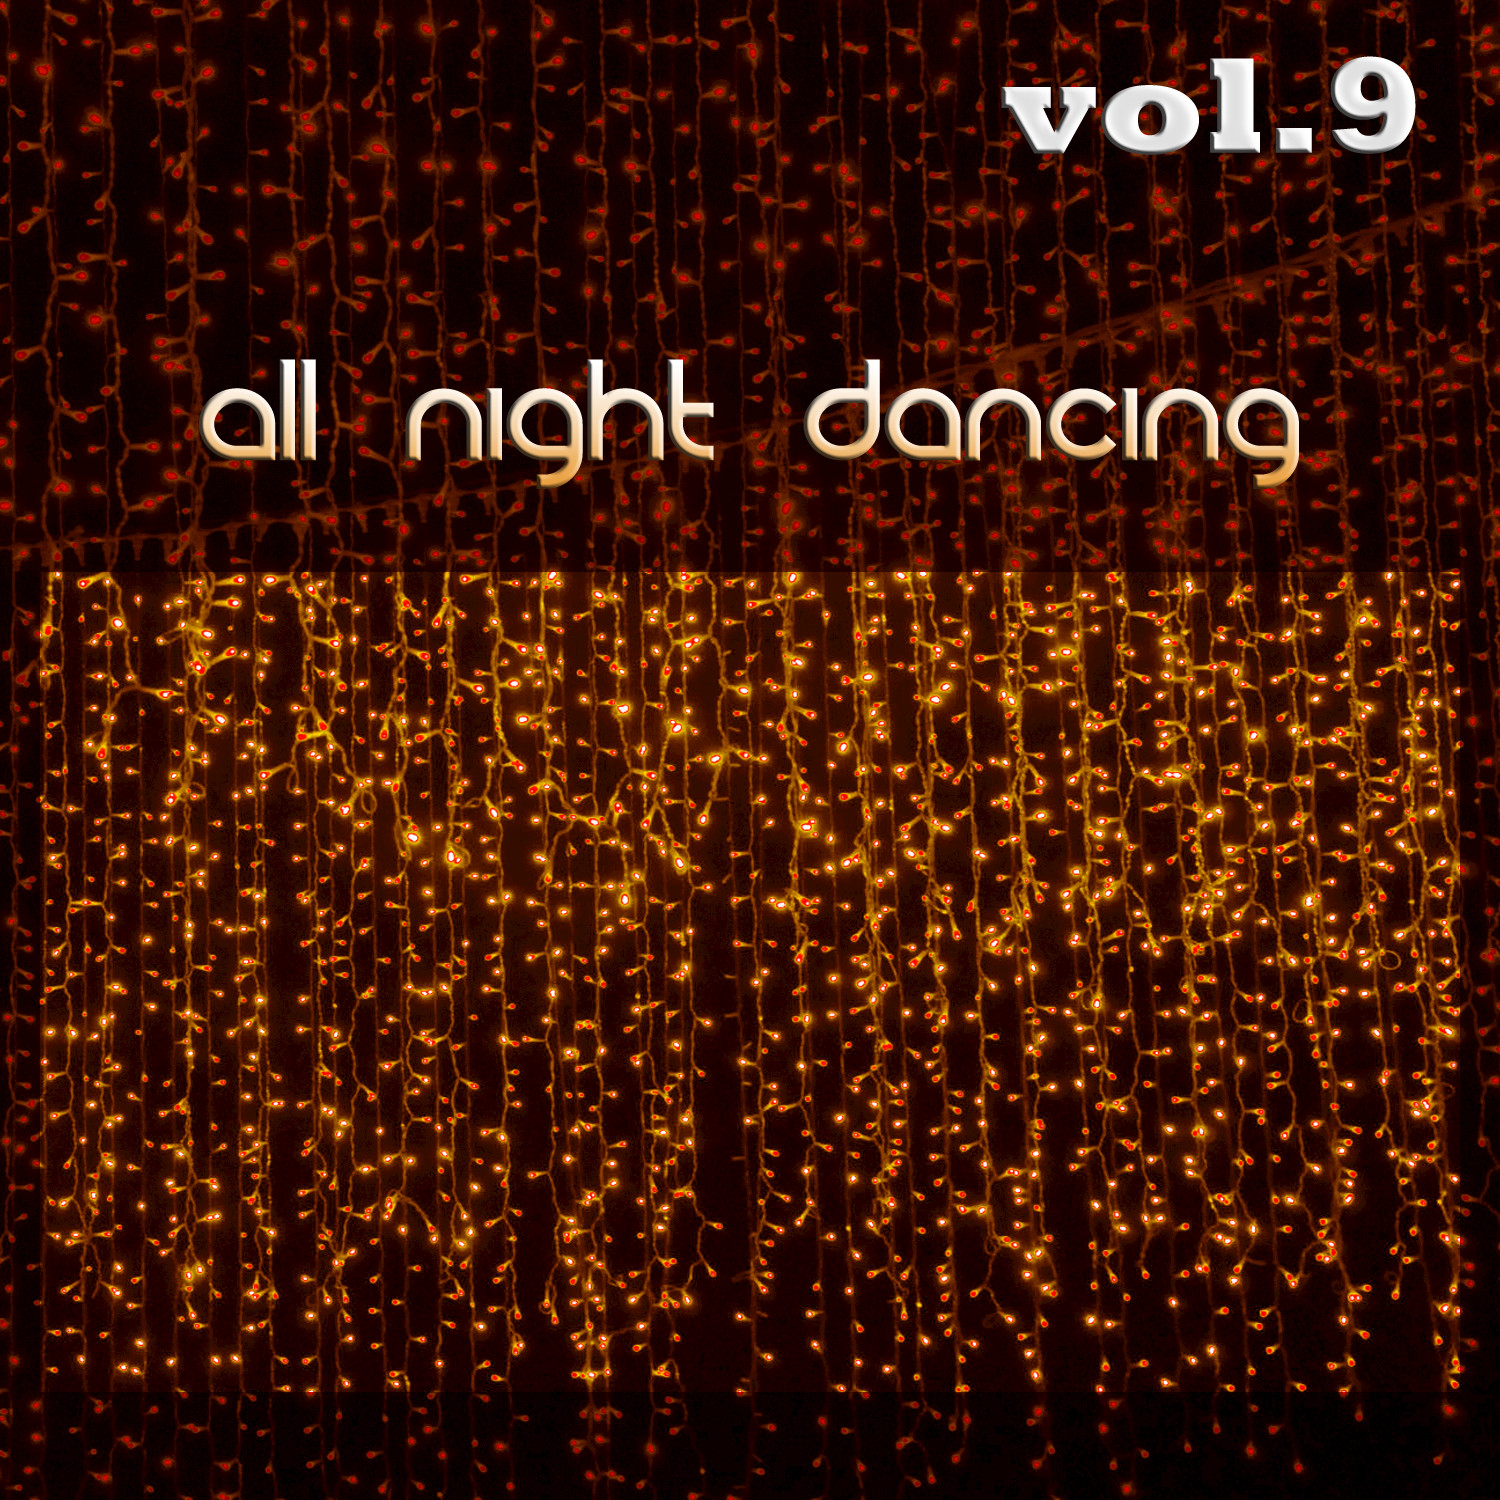 All Night Dancing, Vol. 9